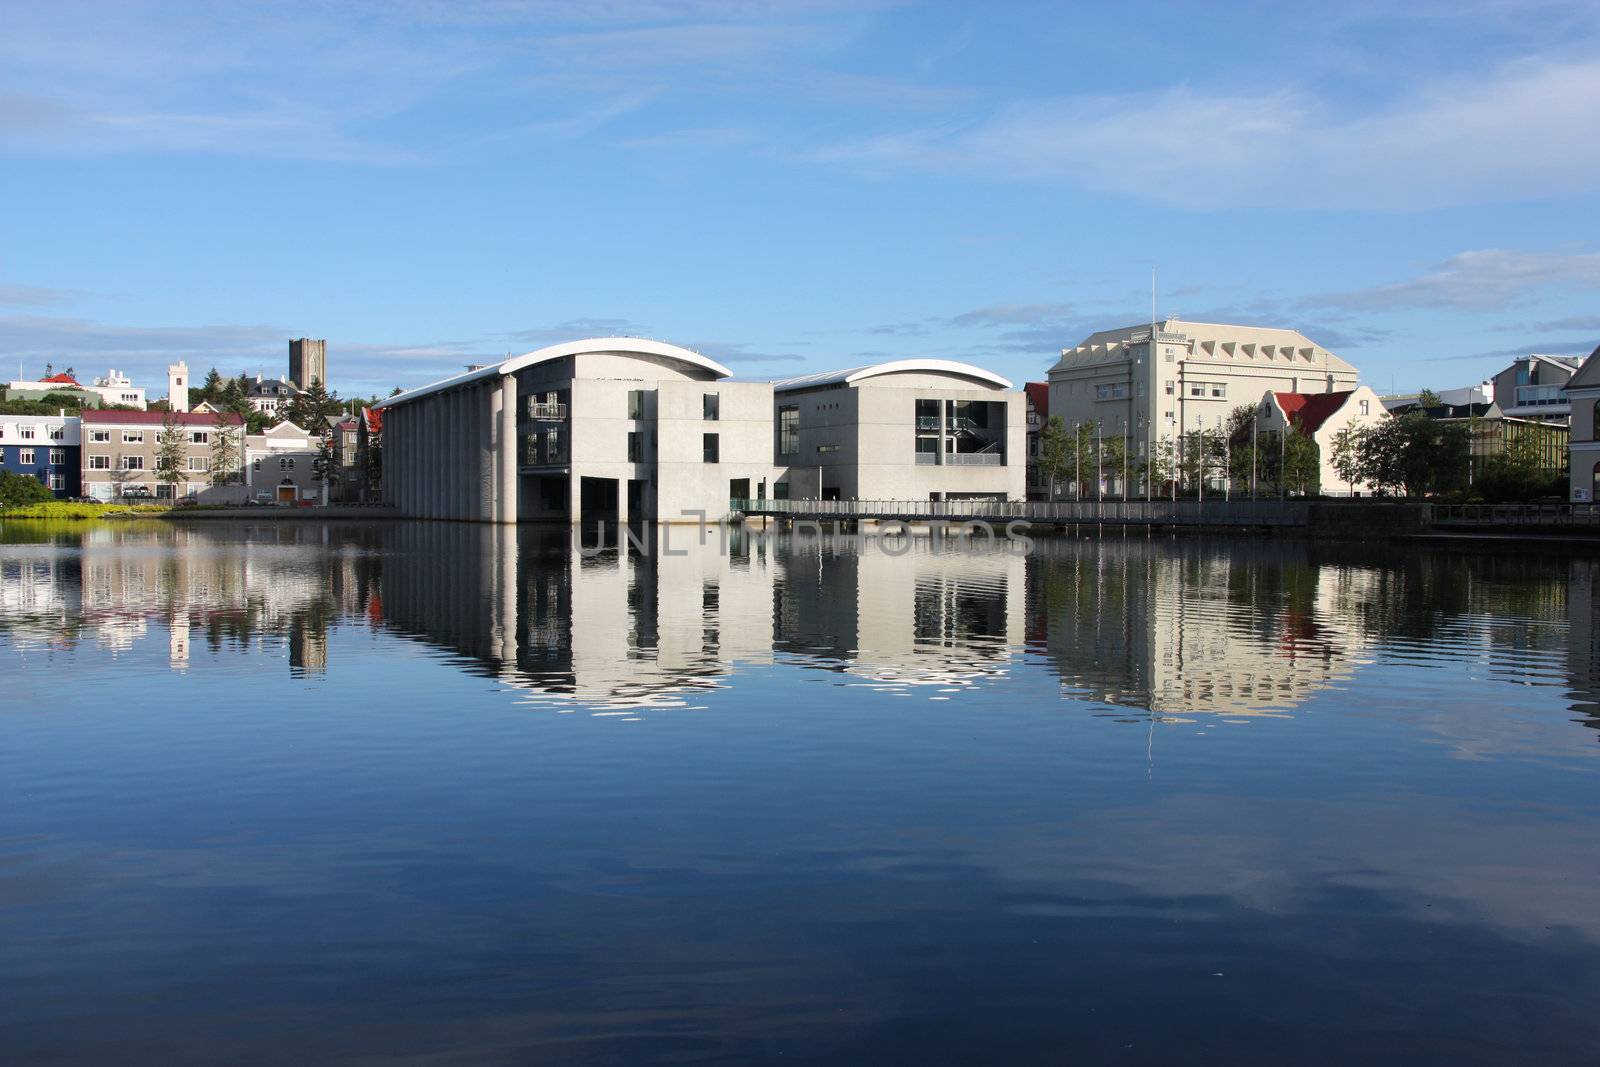 City Hall in Reykjavik, Iceland. Lake Tjorning reflection. Modern architecture.